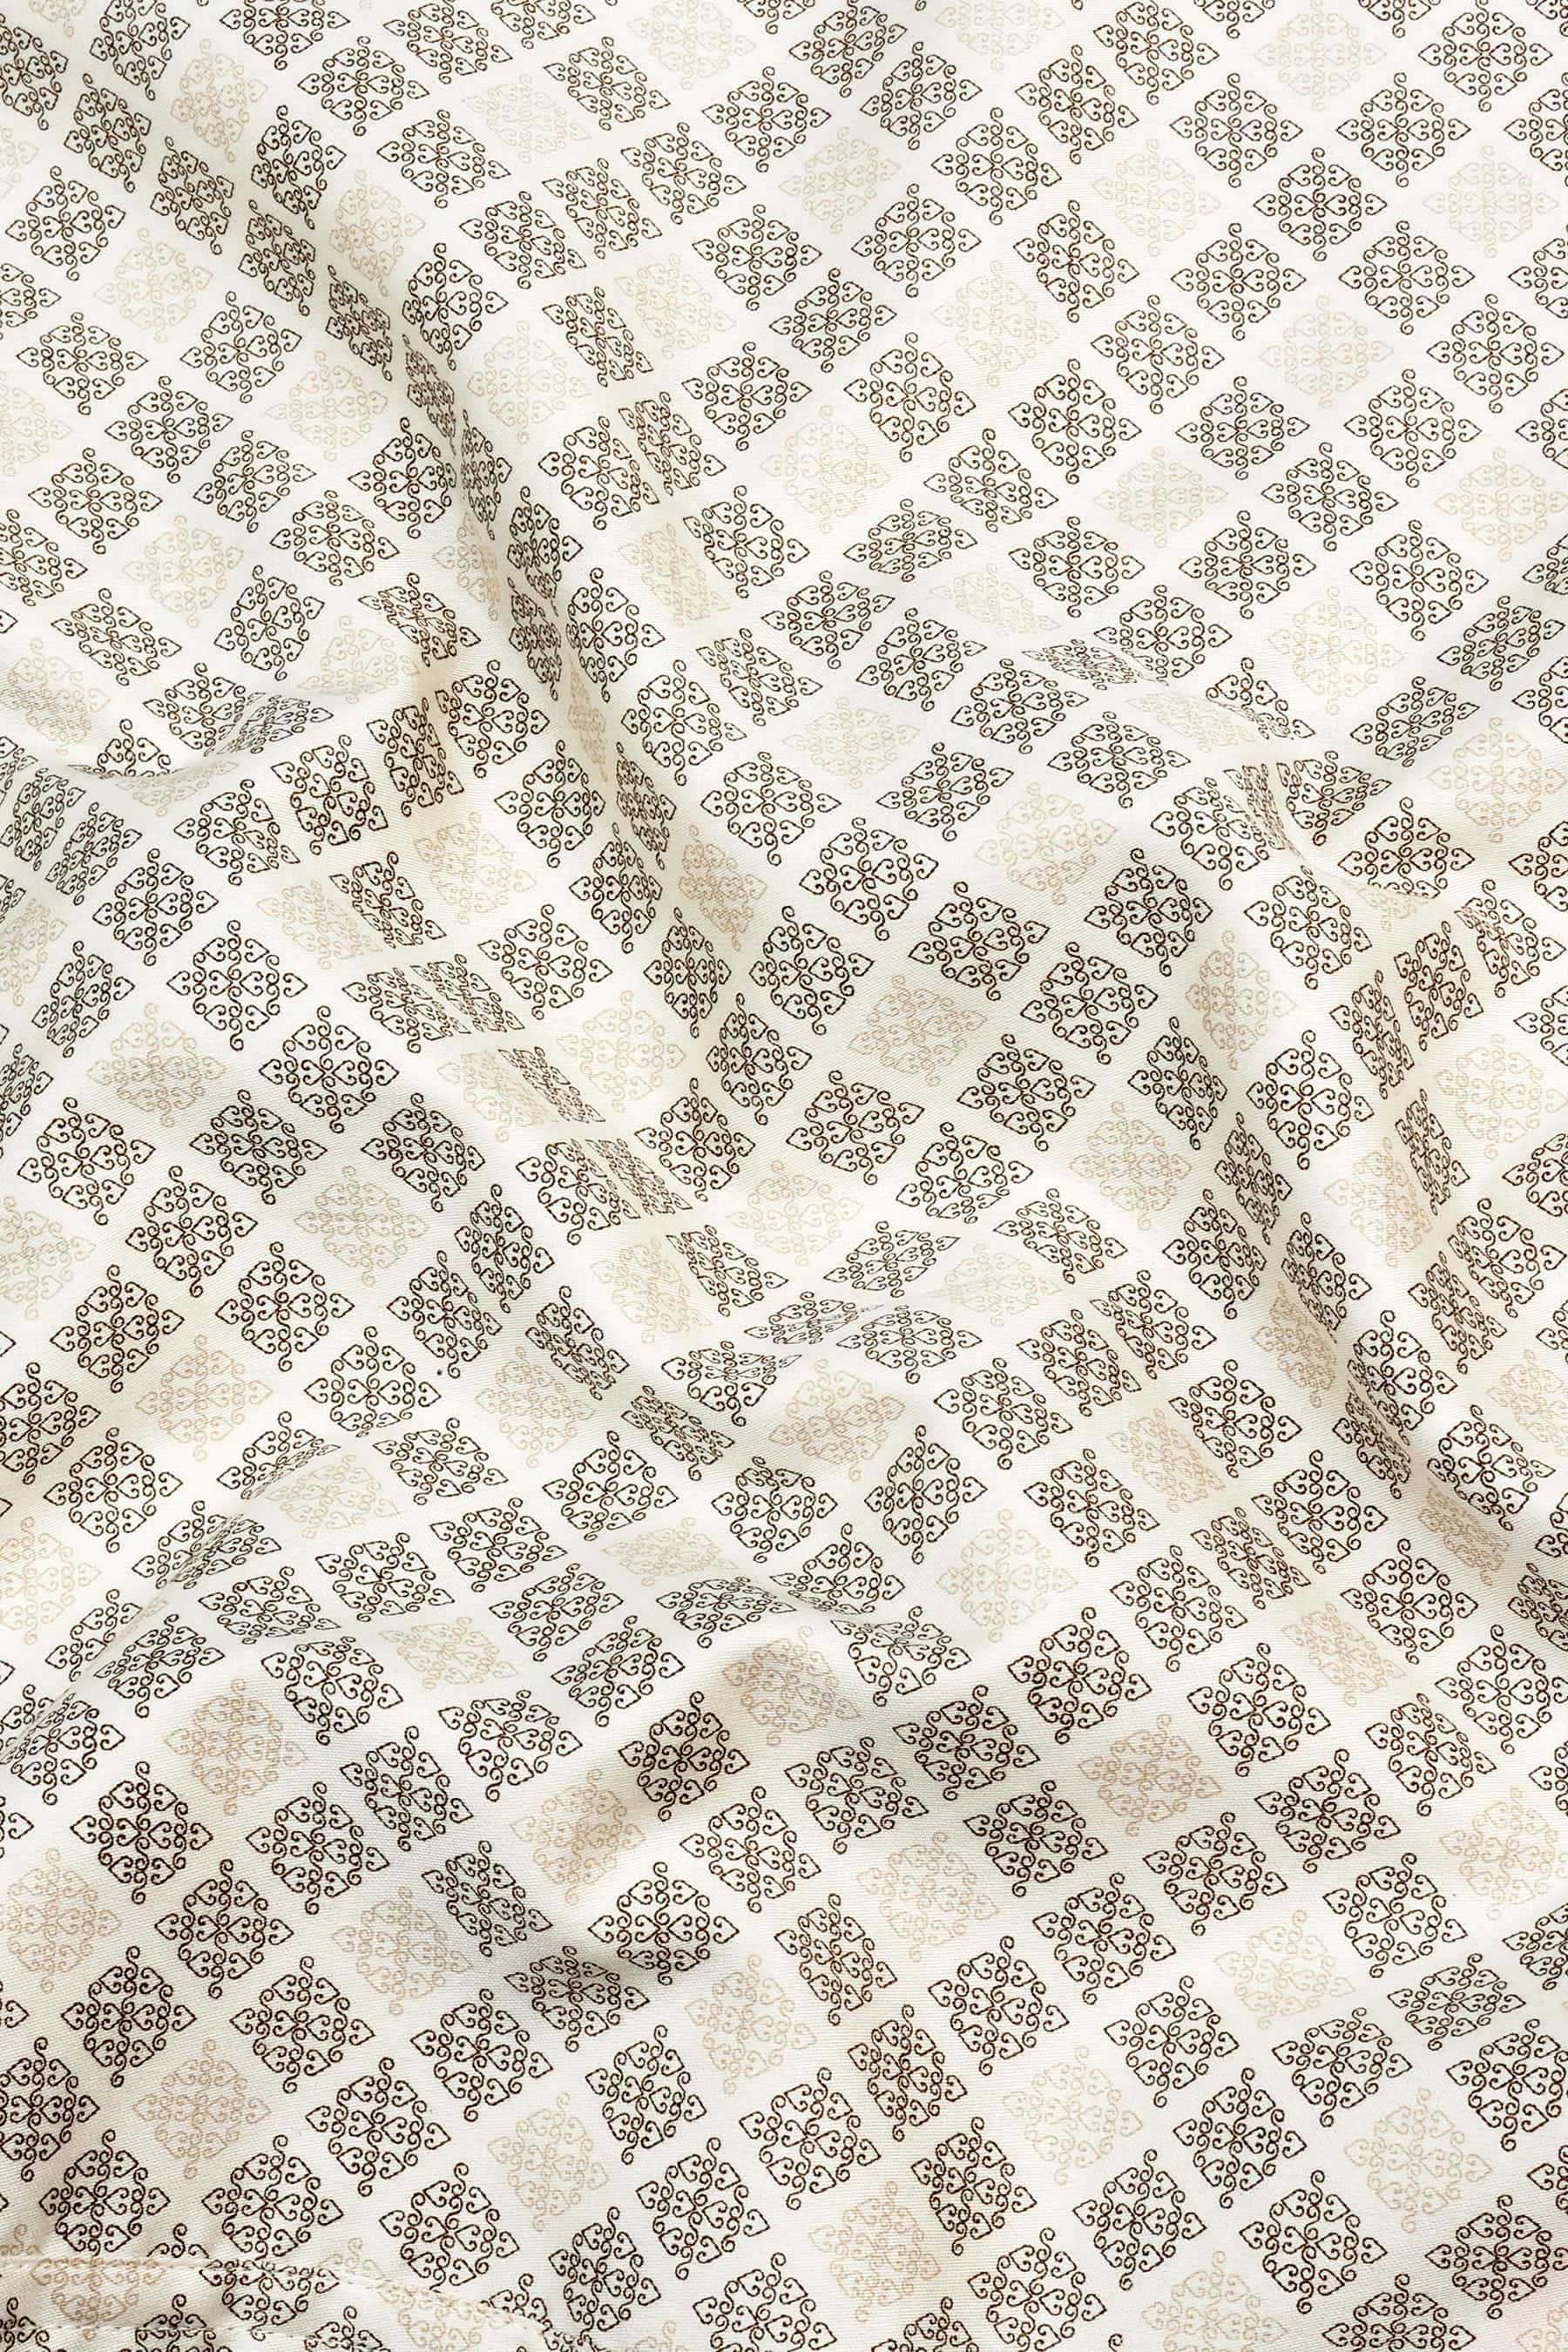 Cream with brown geometrical printed satin shirt